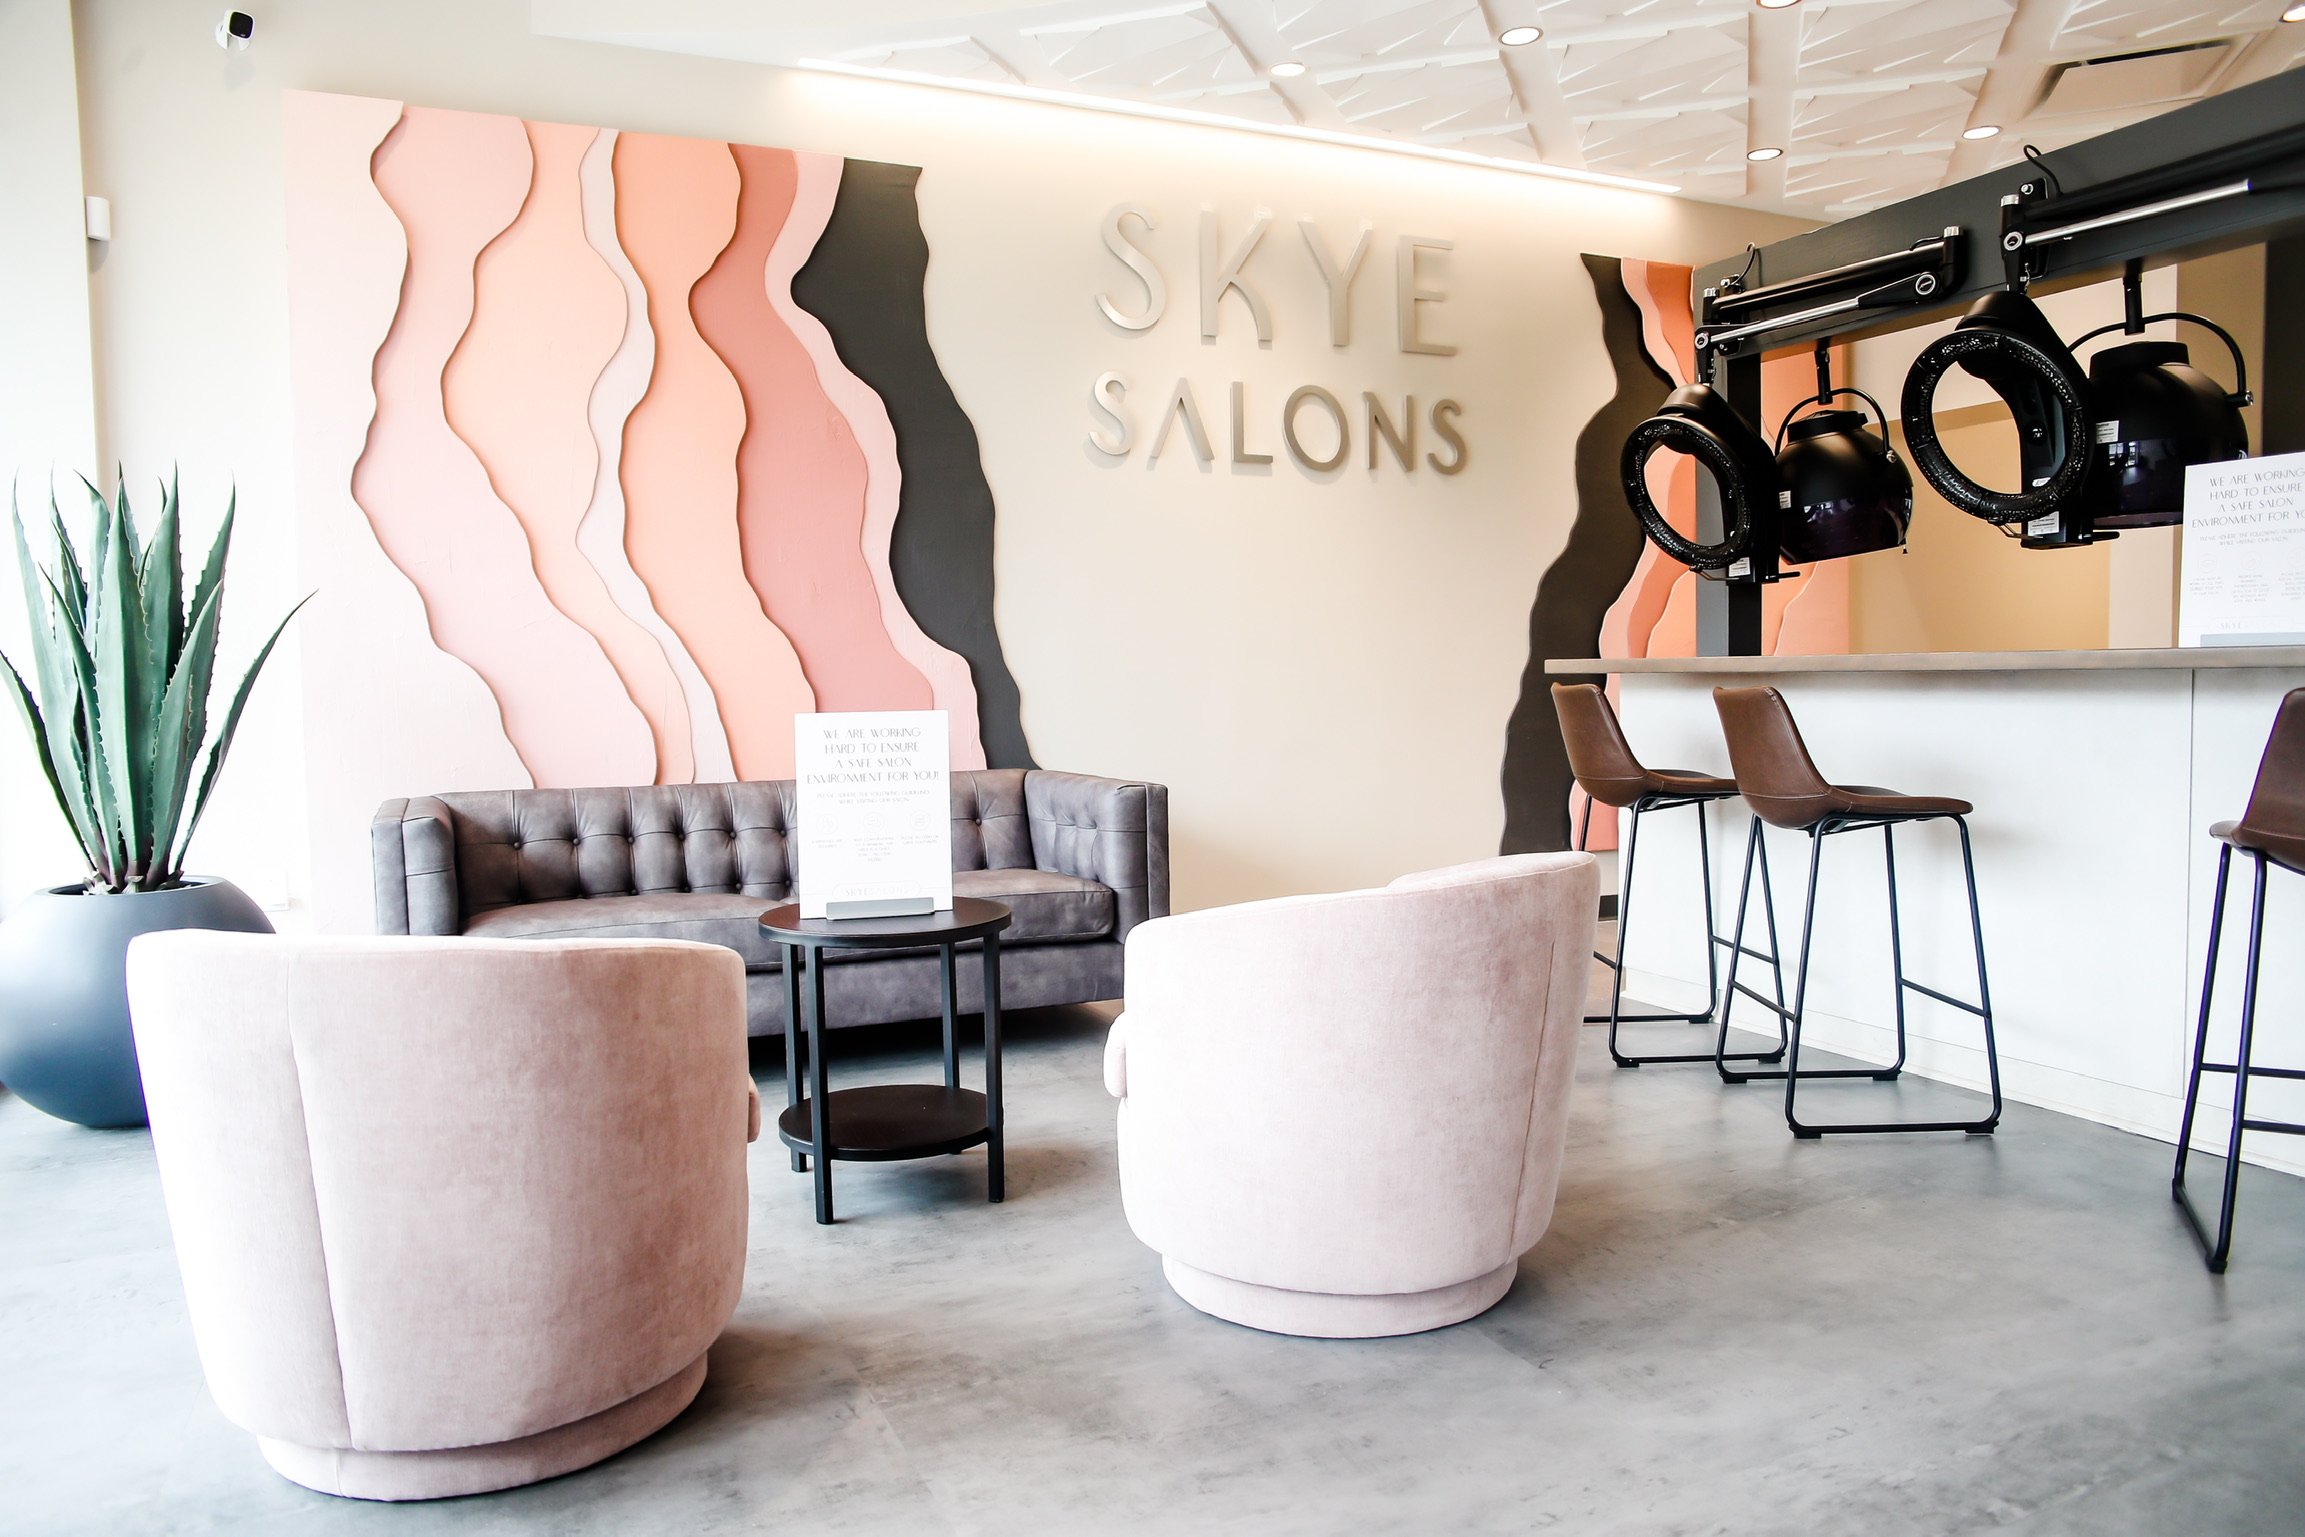 Skye Salon Lobby